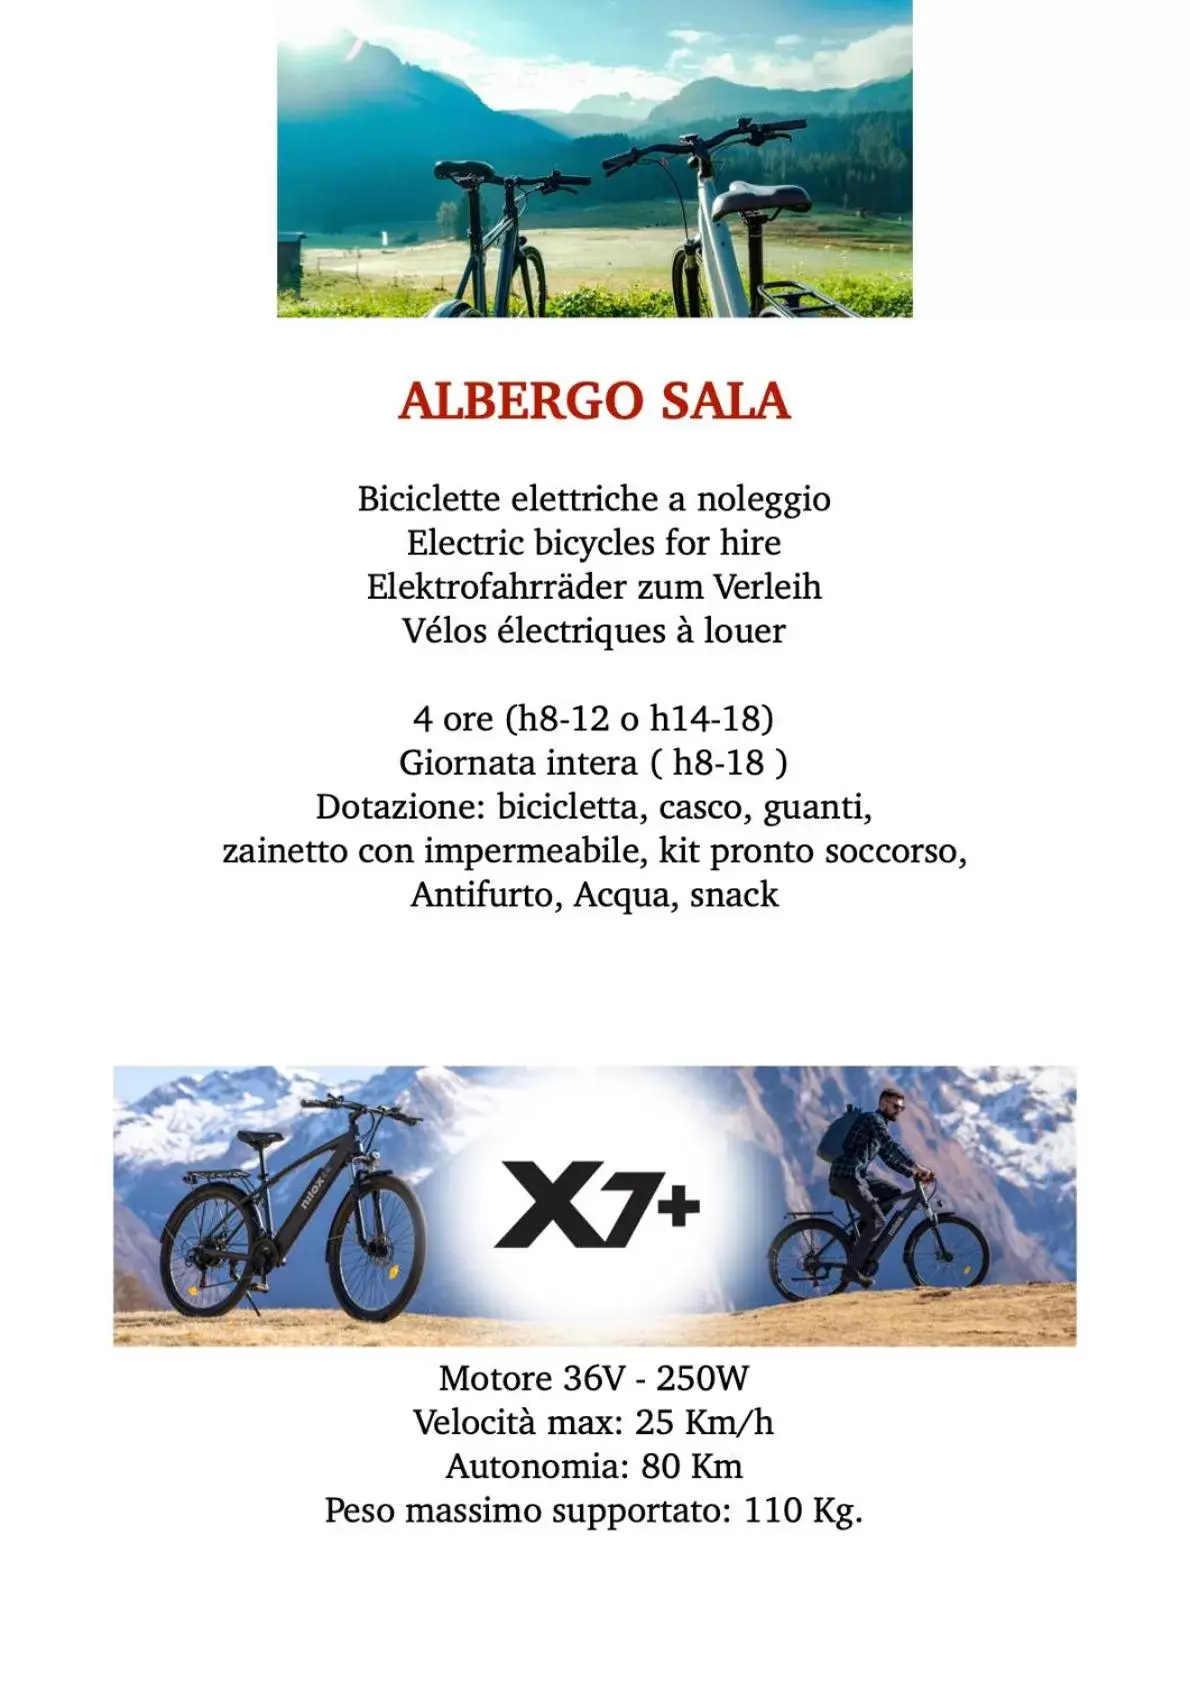 Cycling in Albergo Sala